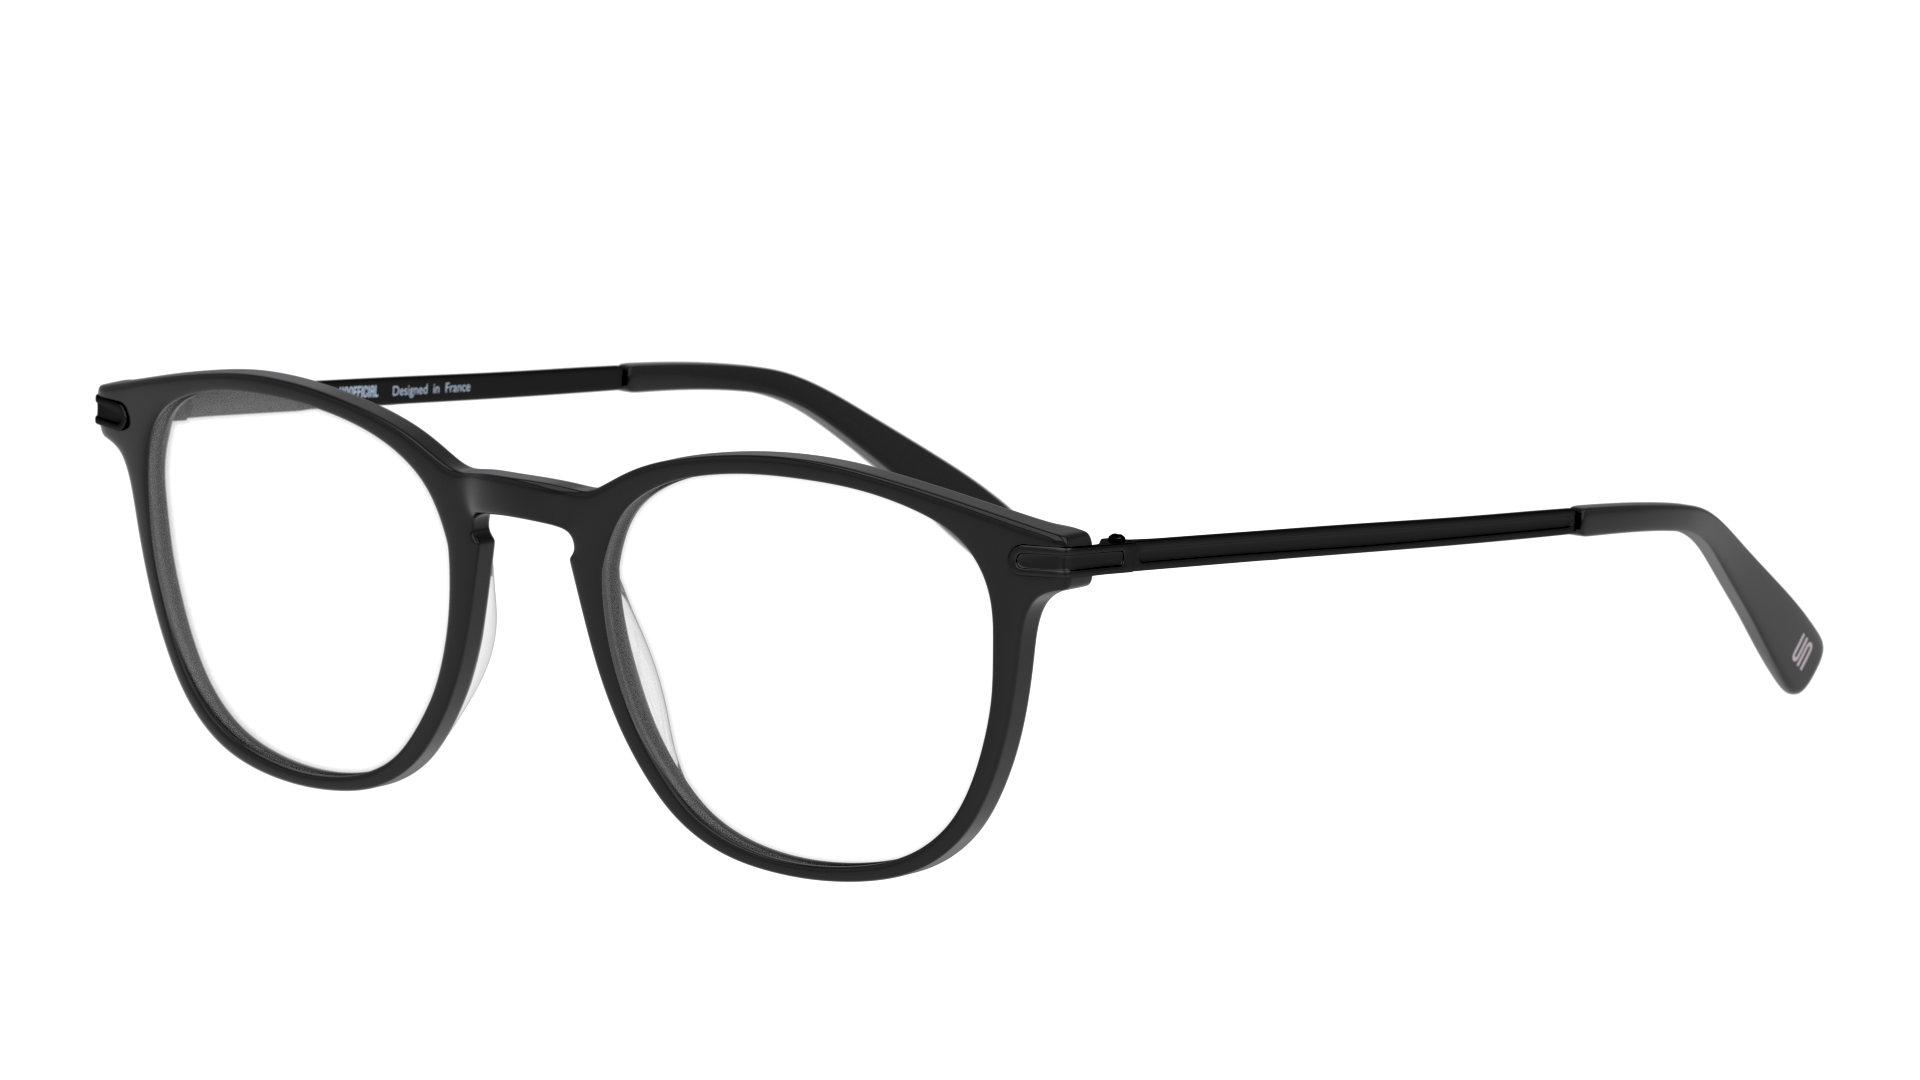 Angle_Left01 Unofficial UNOM0161 (BB00) Glasses Transparent / Black